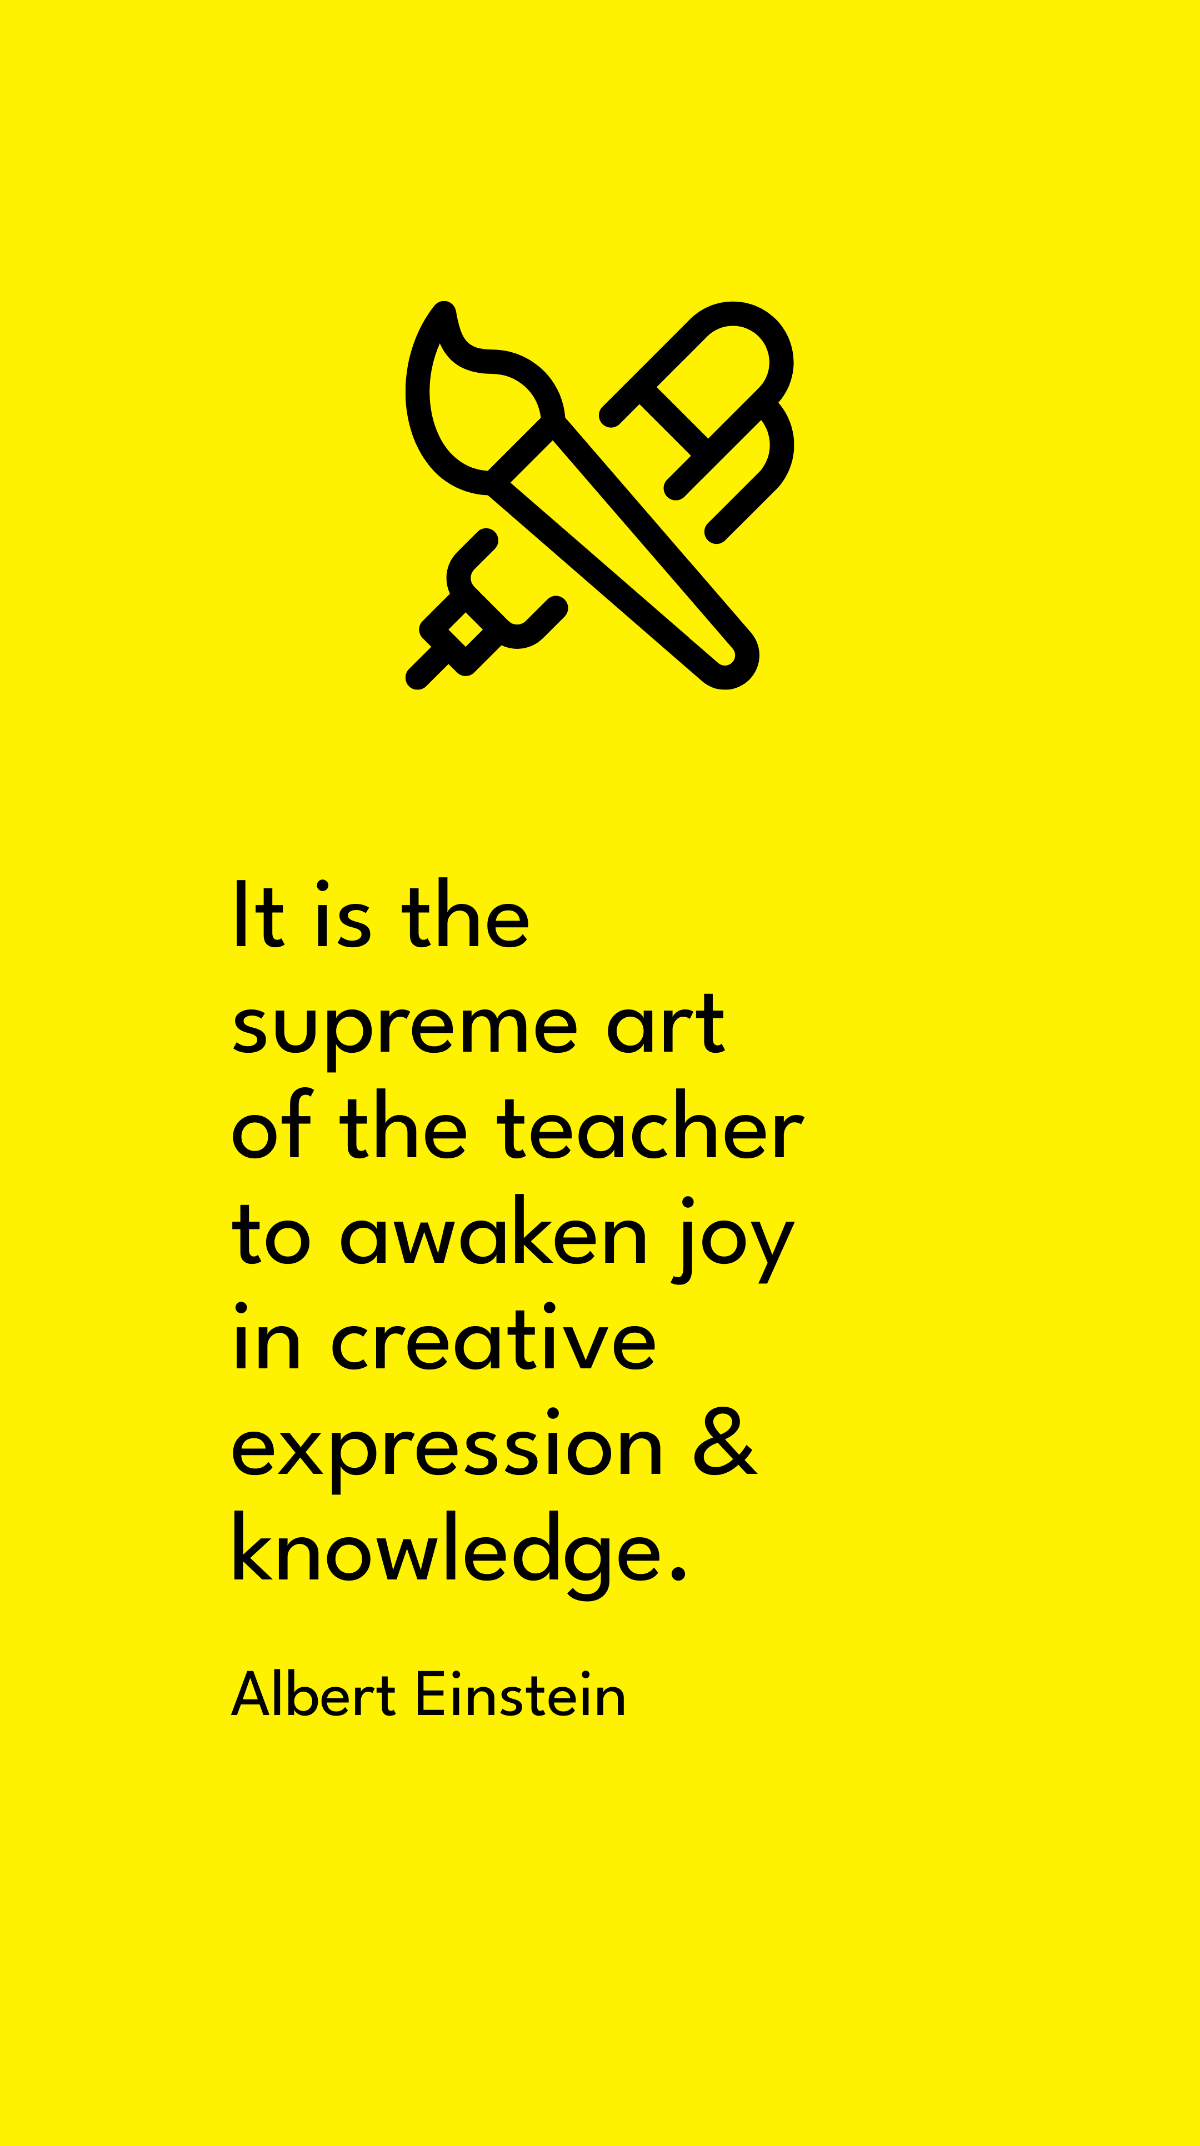 Albert Einstein - It is the supreme art of the teacher to awaken joy in creative expression & knowledge. Template